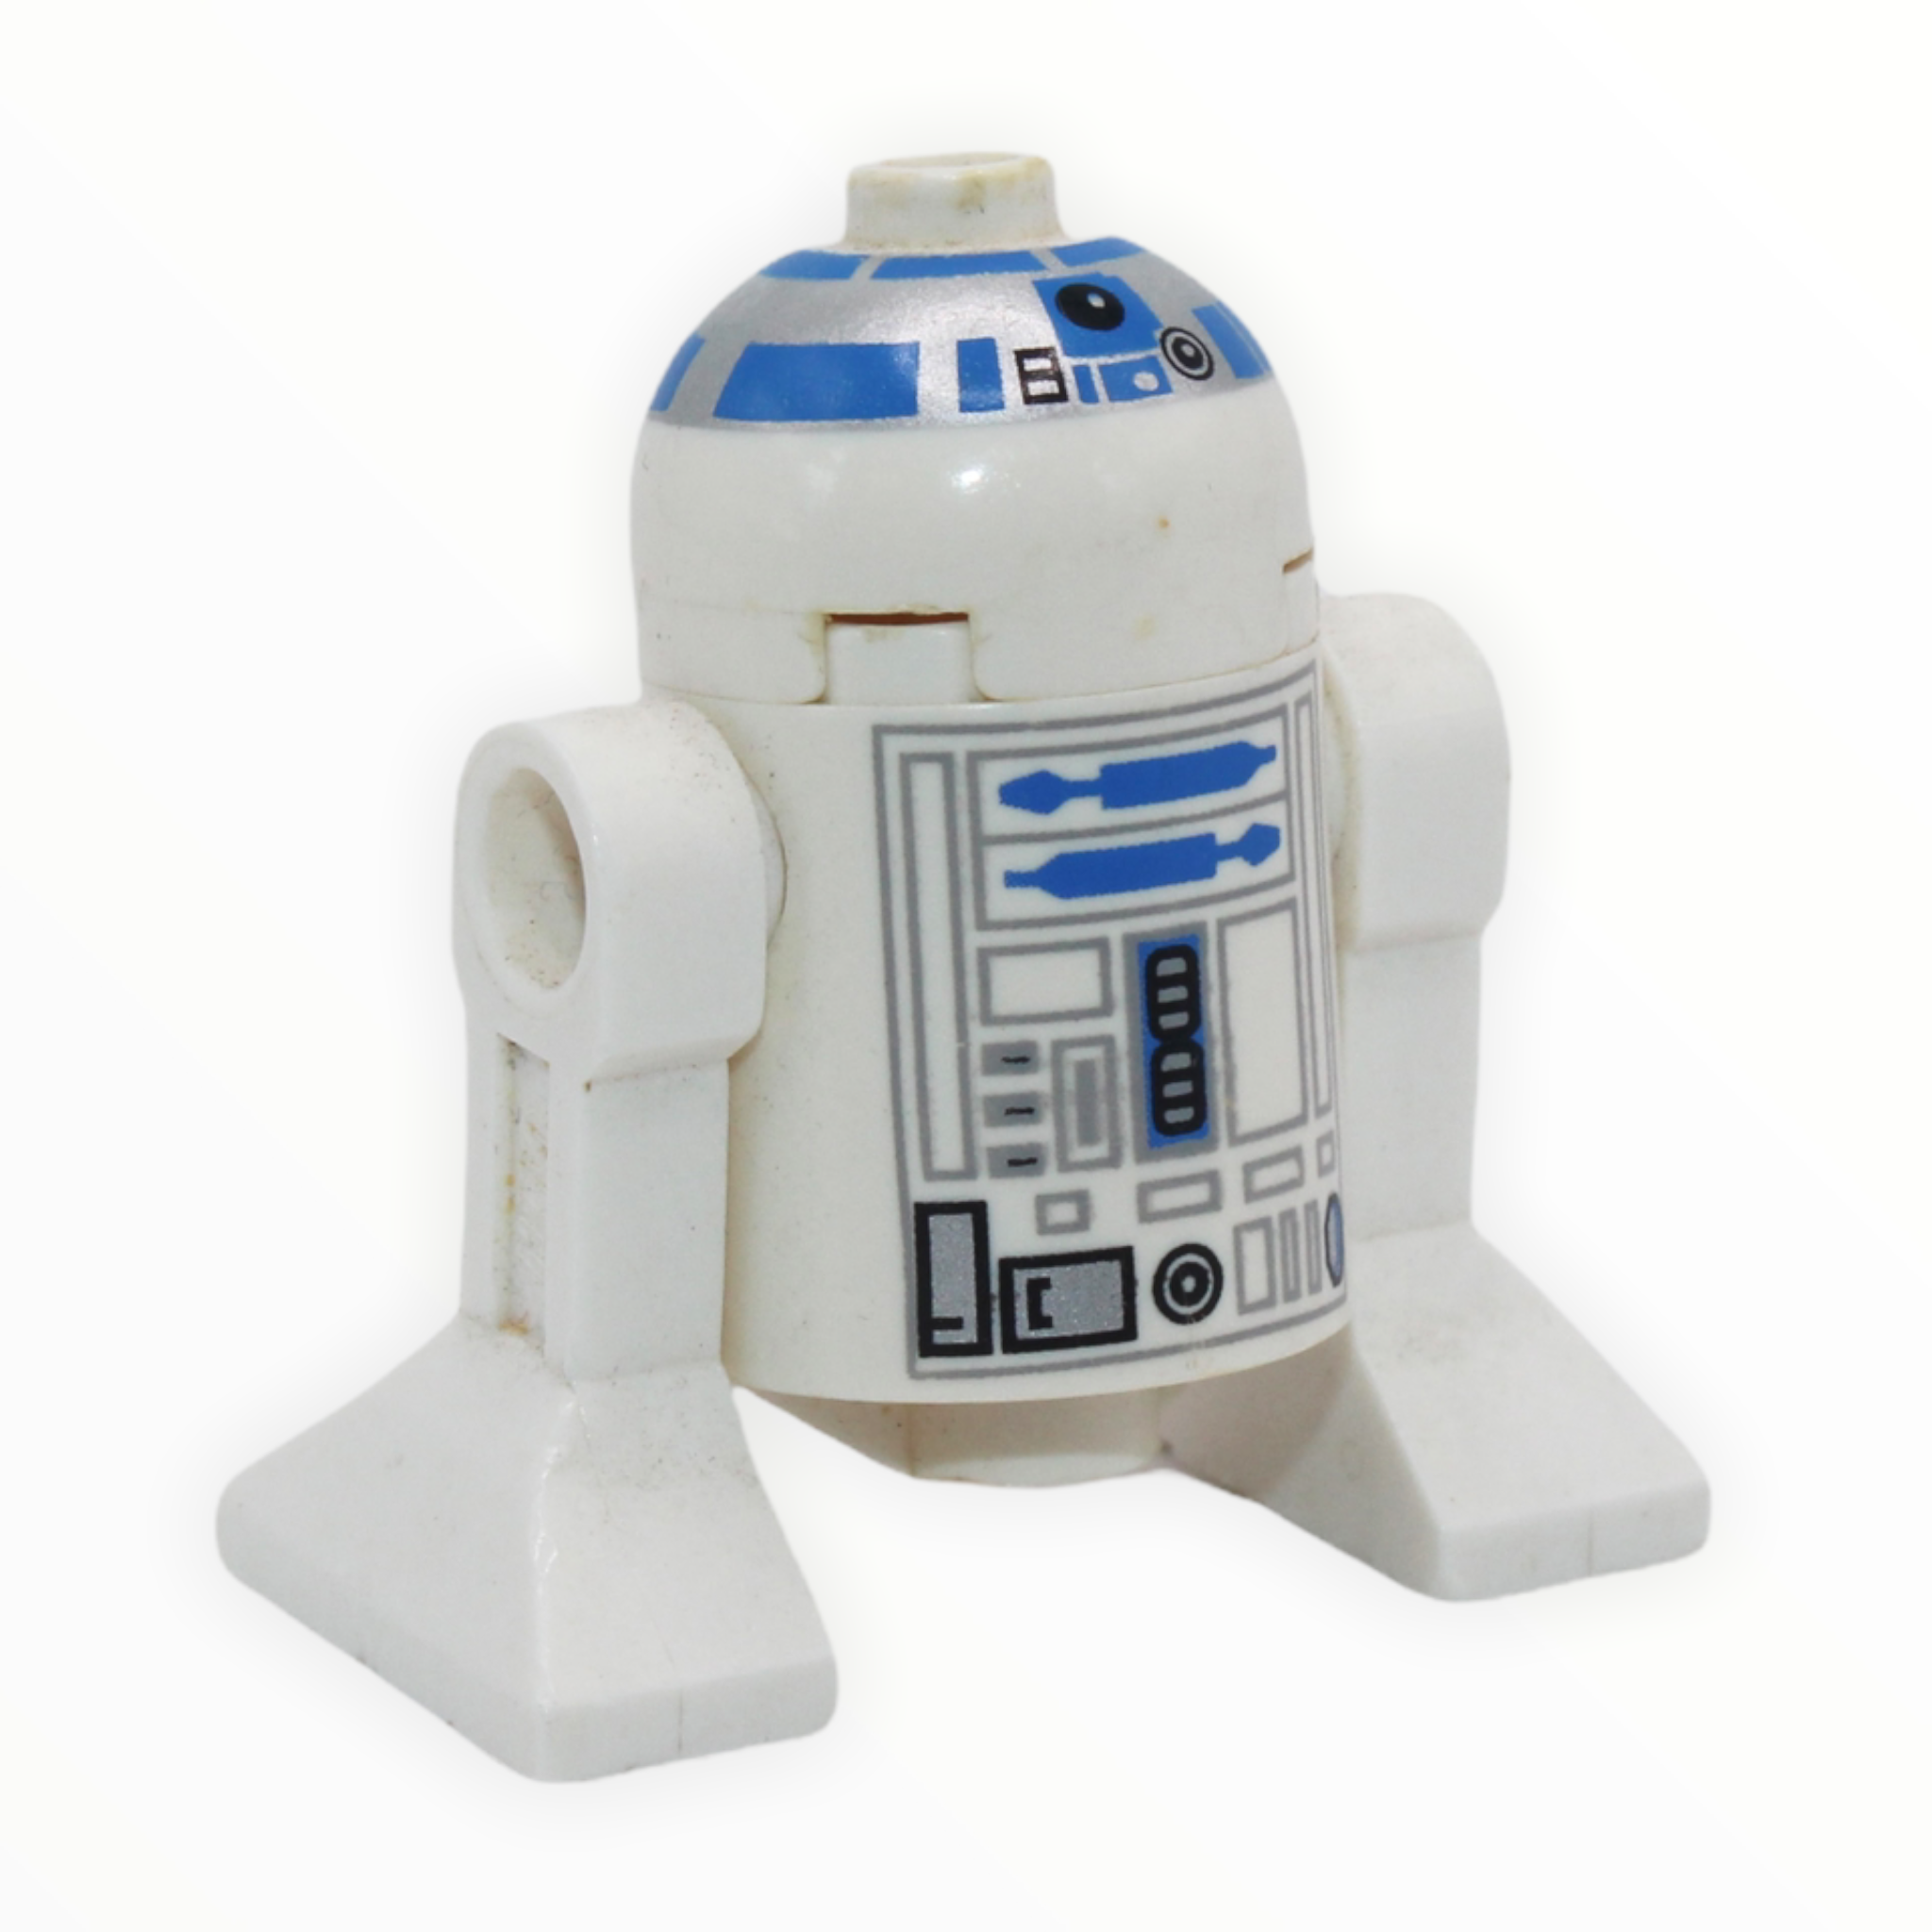 R2-D2 (white, 1999)